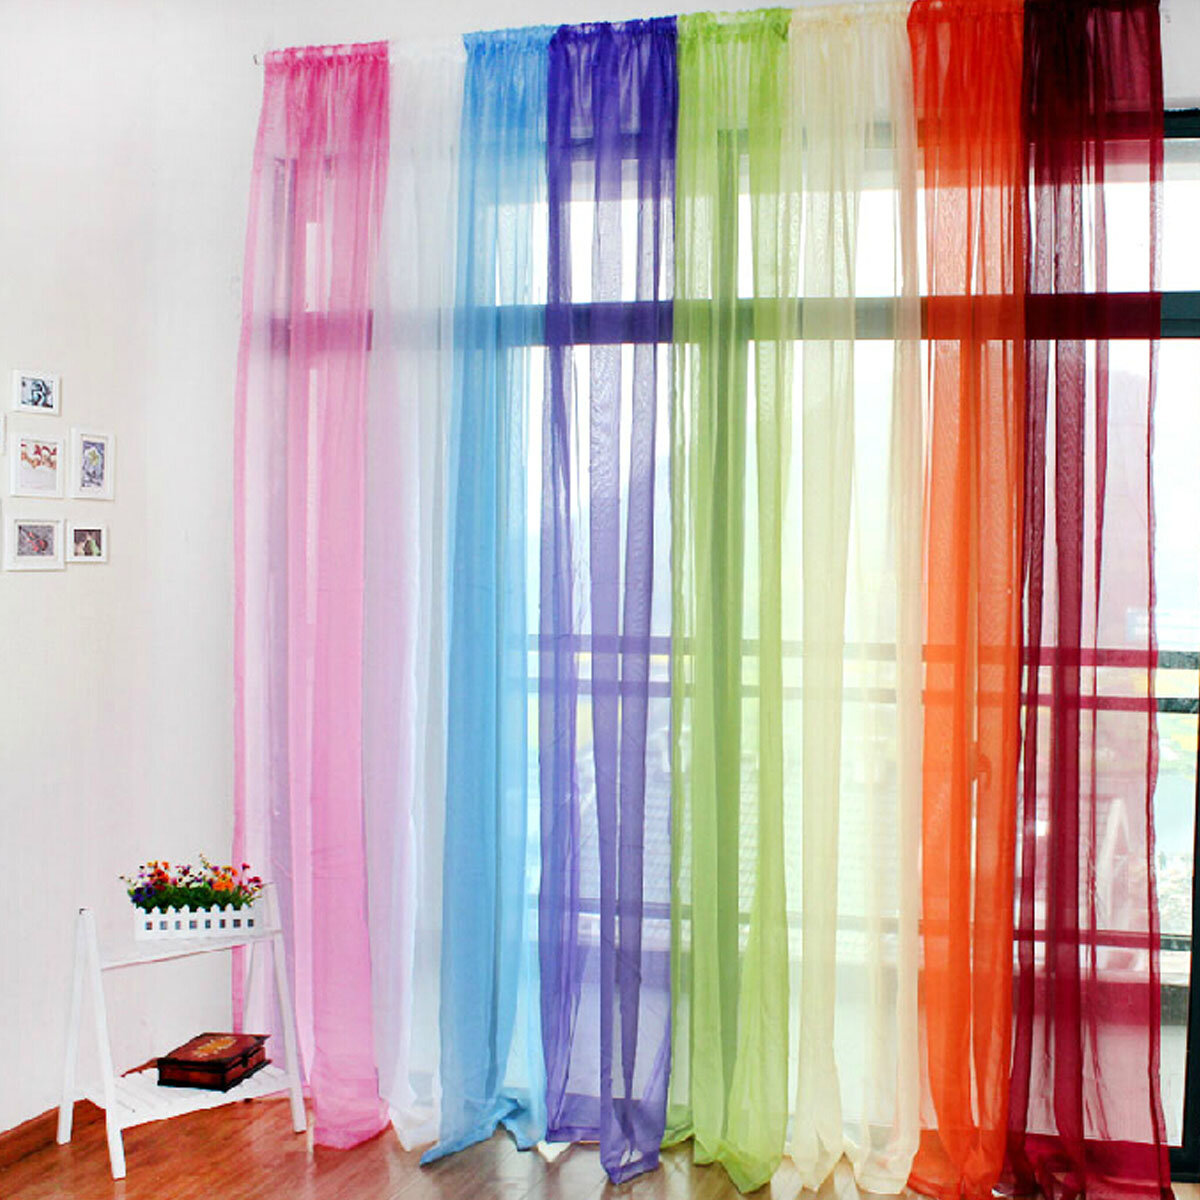 

100 X 200cm Translucent Sheer Tulle Voile Organdy Curtain Door Window Vestibule Room Decor, Green;purple;red;yellow;white;blue;black;pink